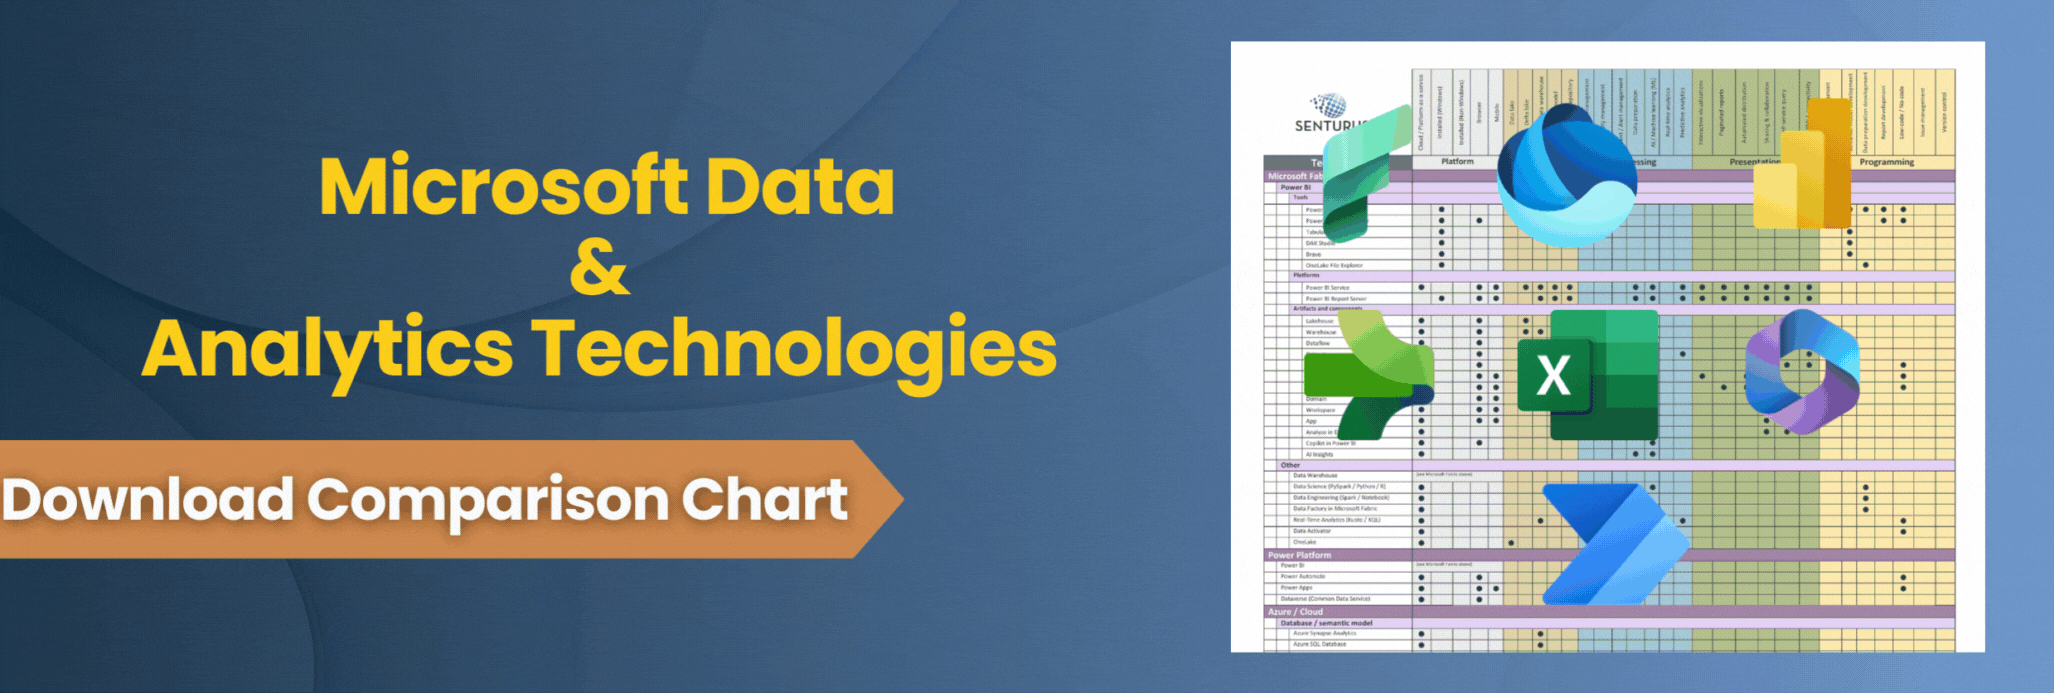 Comparison Chart of Microsoft Data & Analytics Technologies